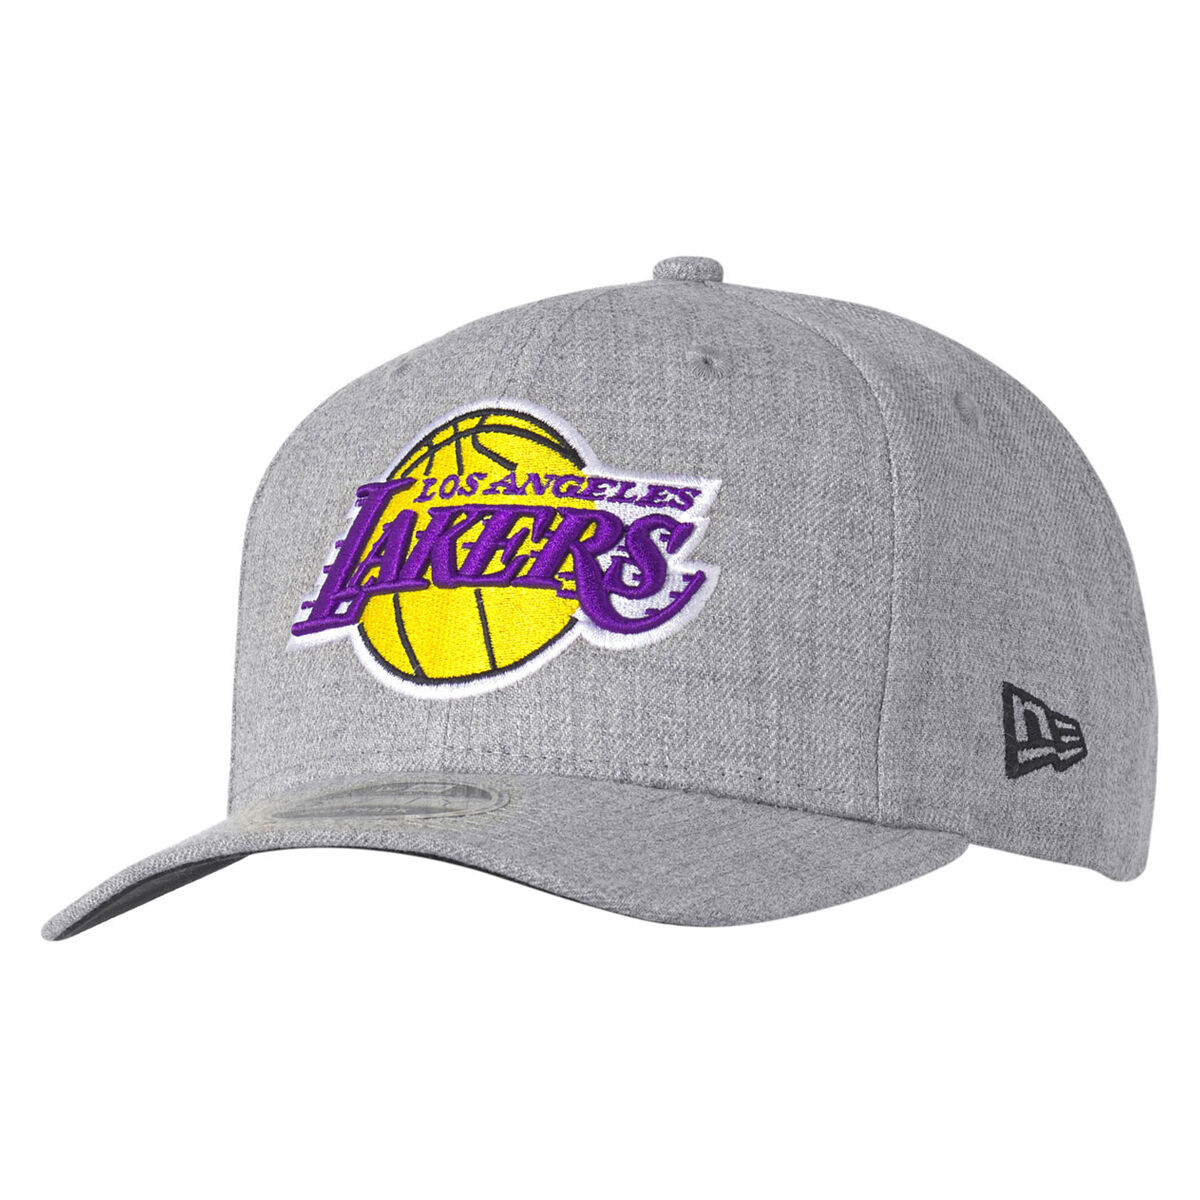 Los Angeles Lakers New Era 9FIFTY Cap | Rebel Sport